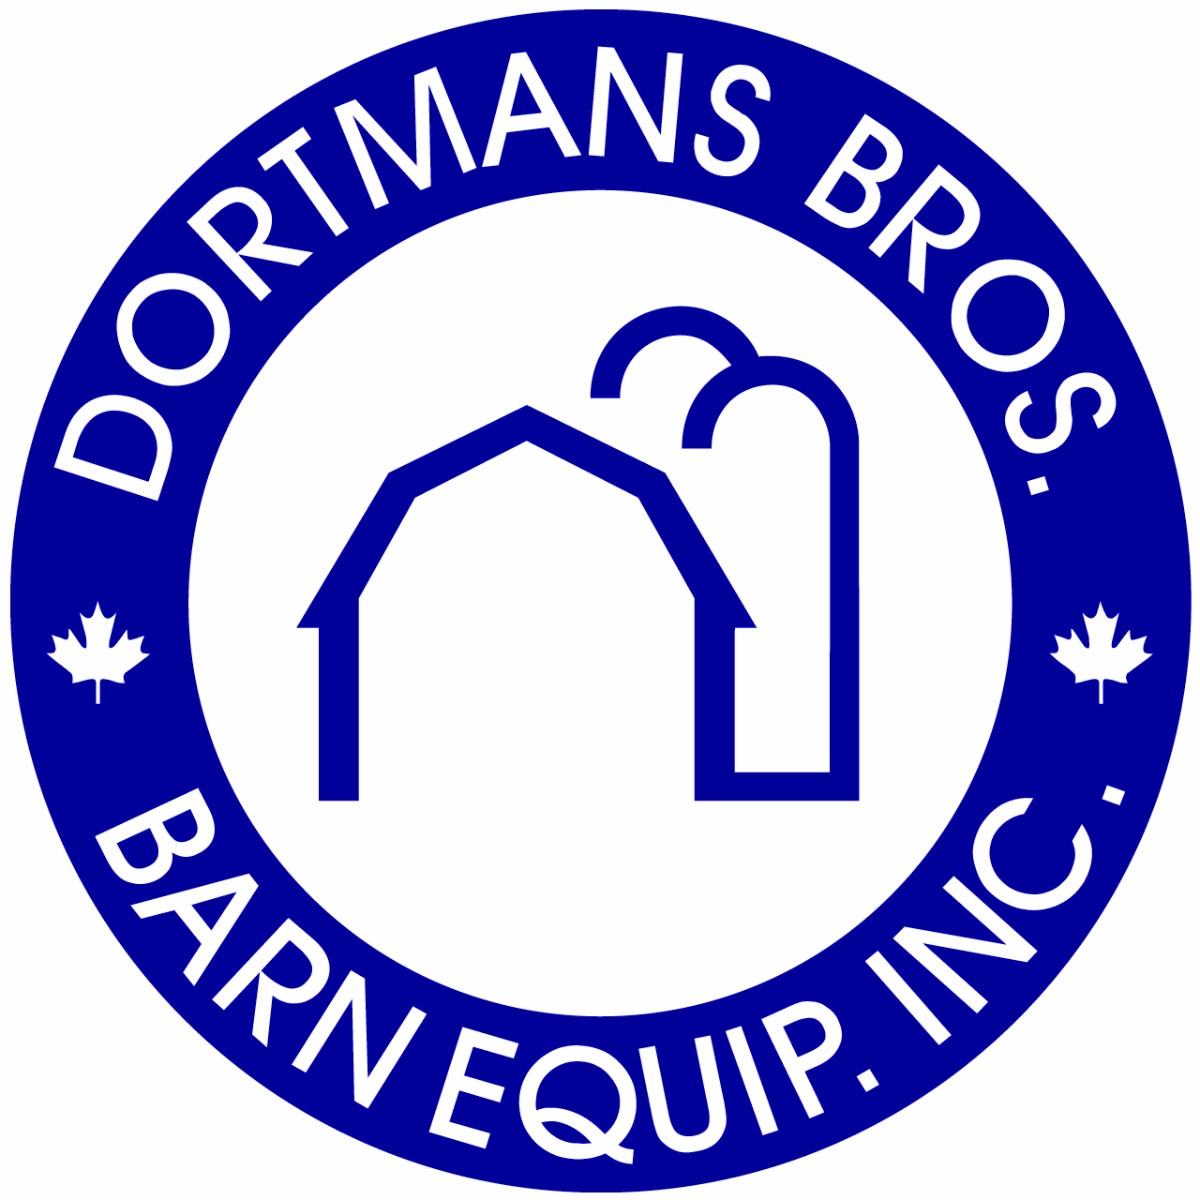 Dortmans Bros.